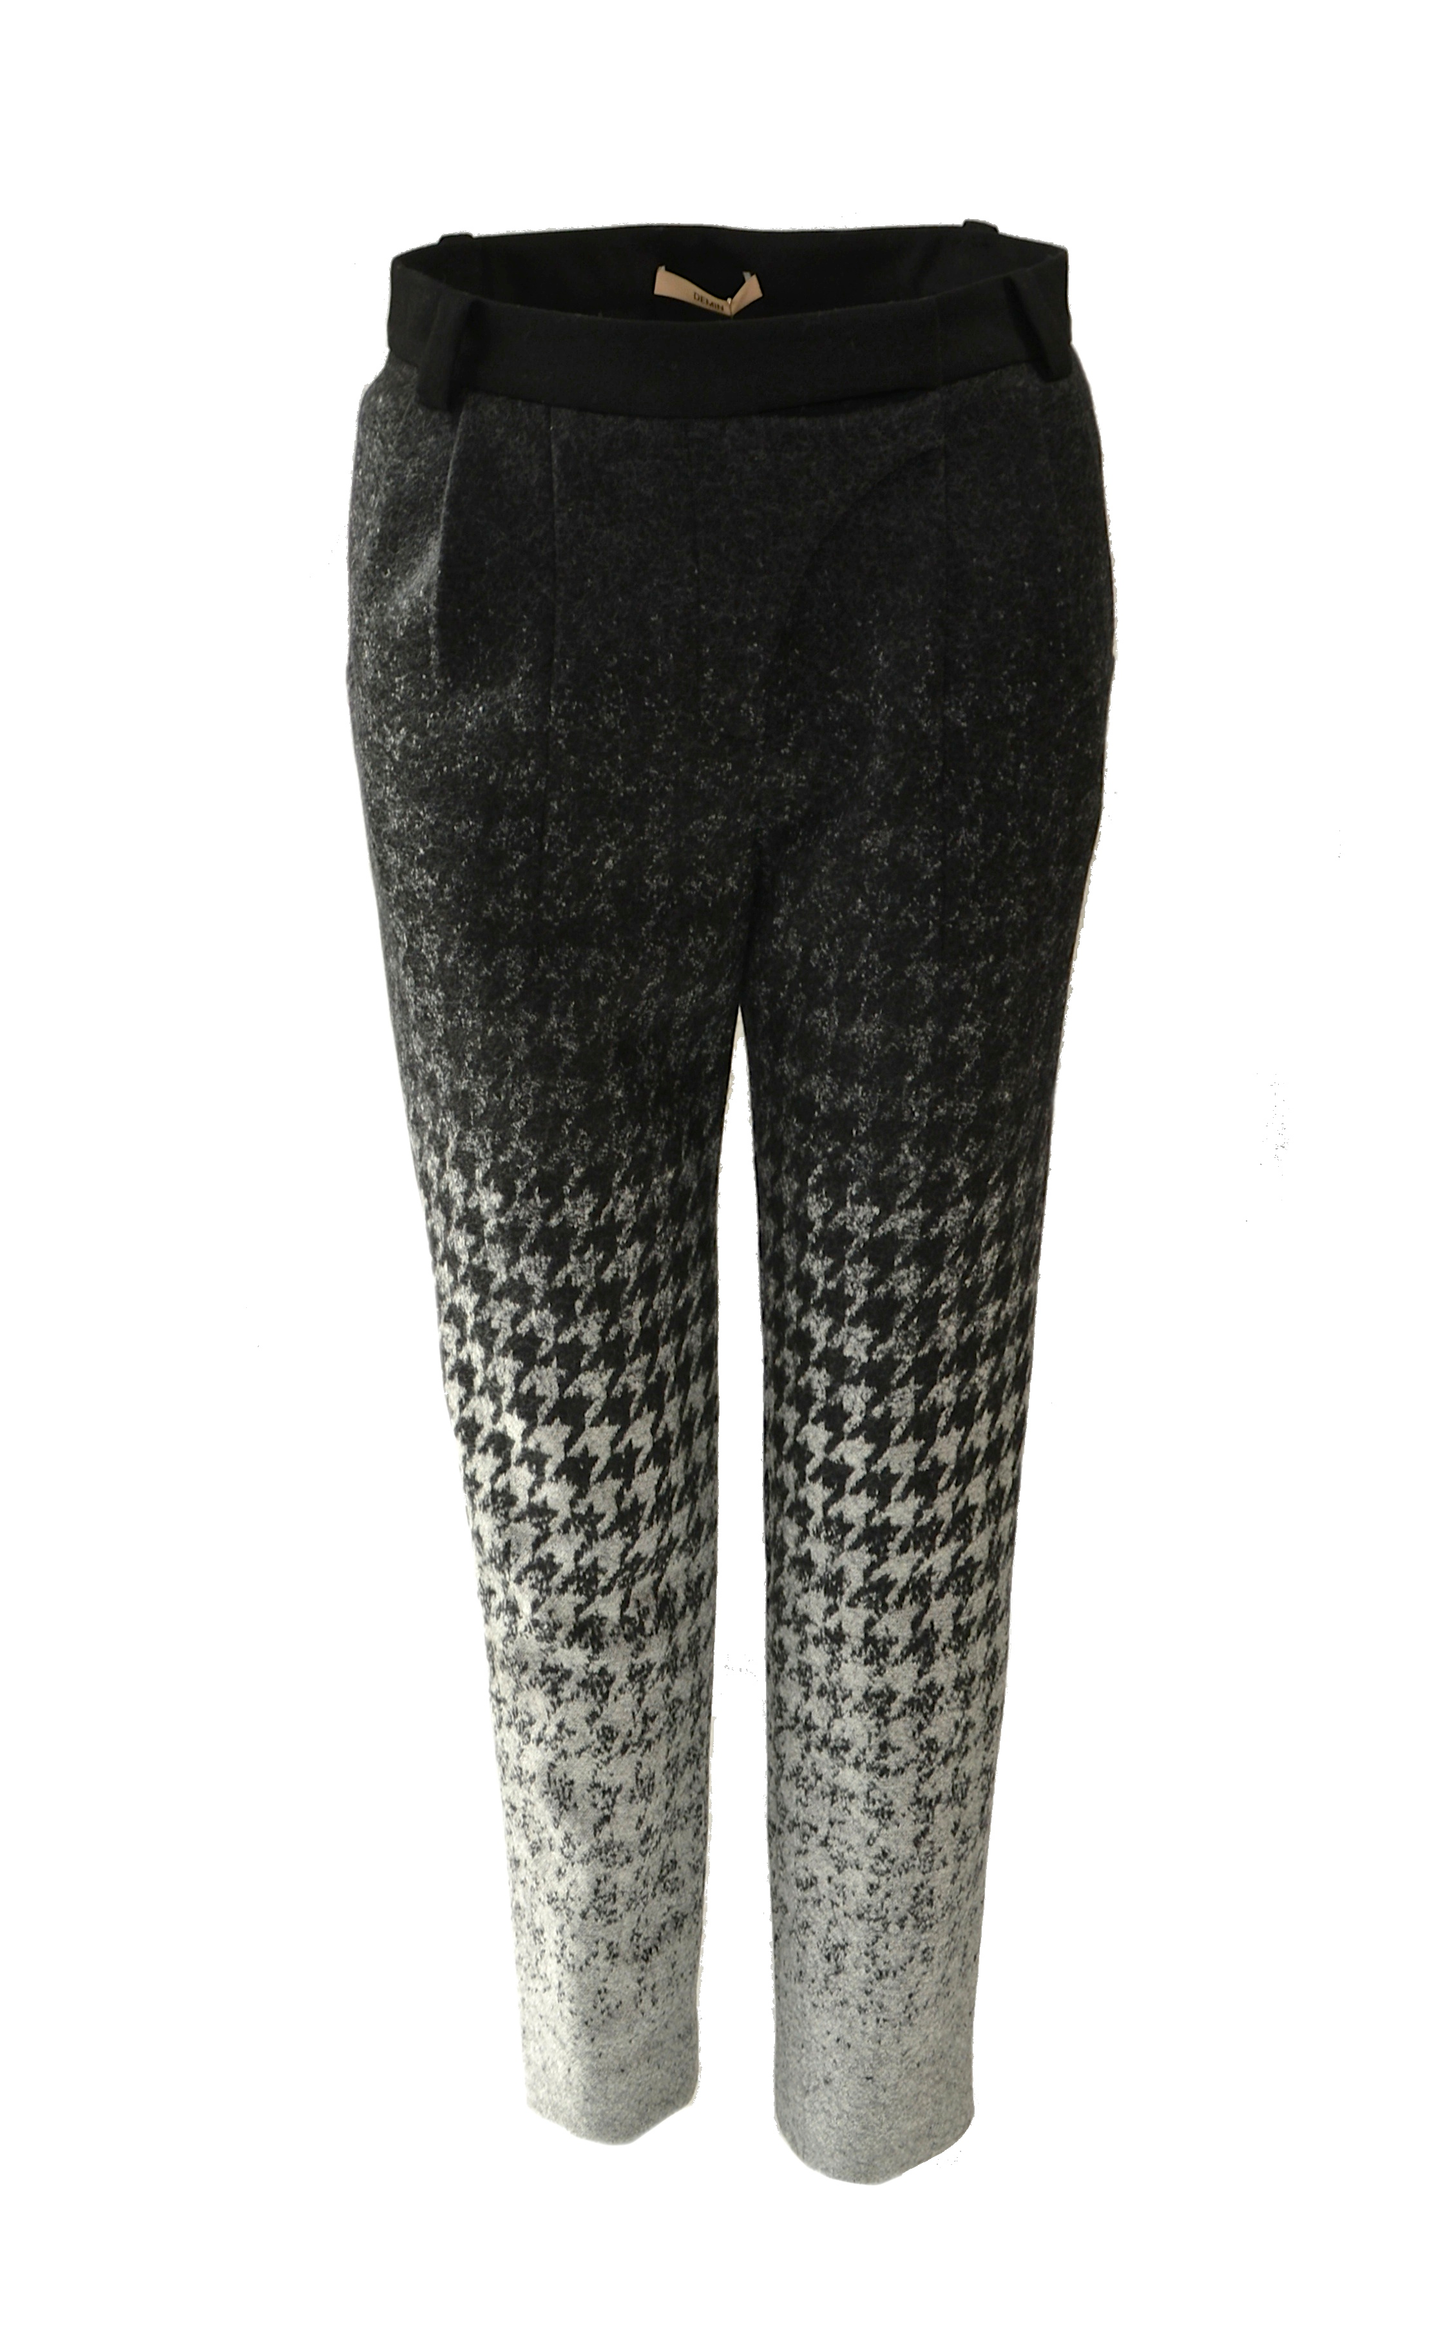 Wool winter trousers in gray tones